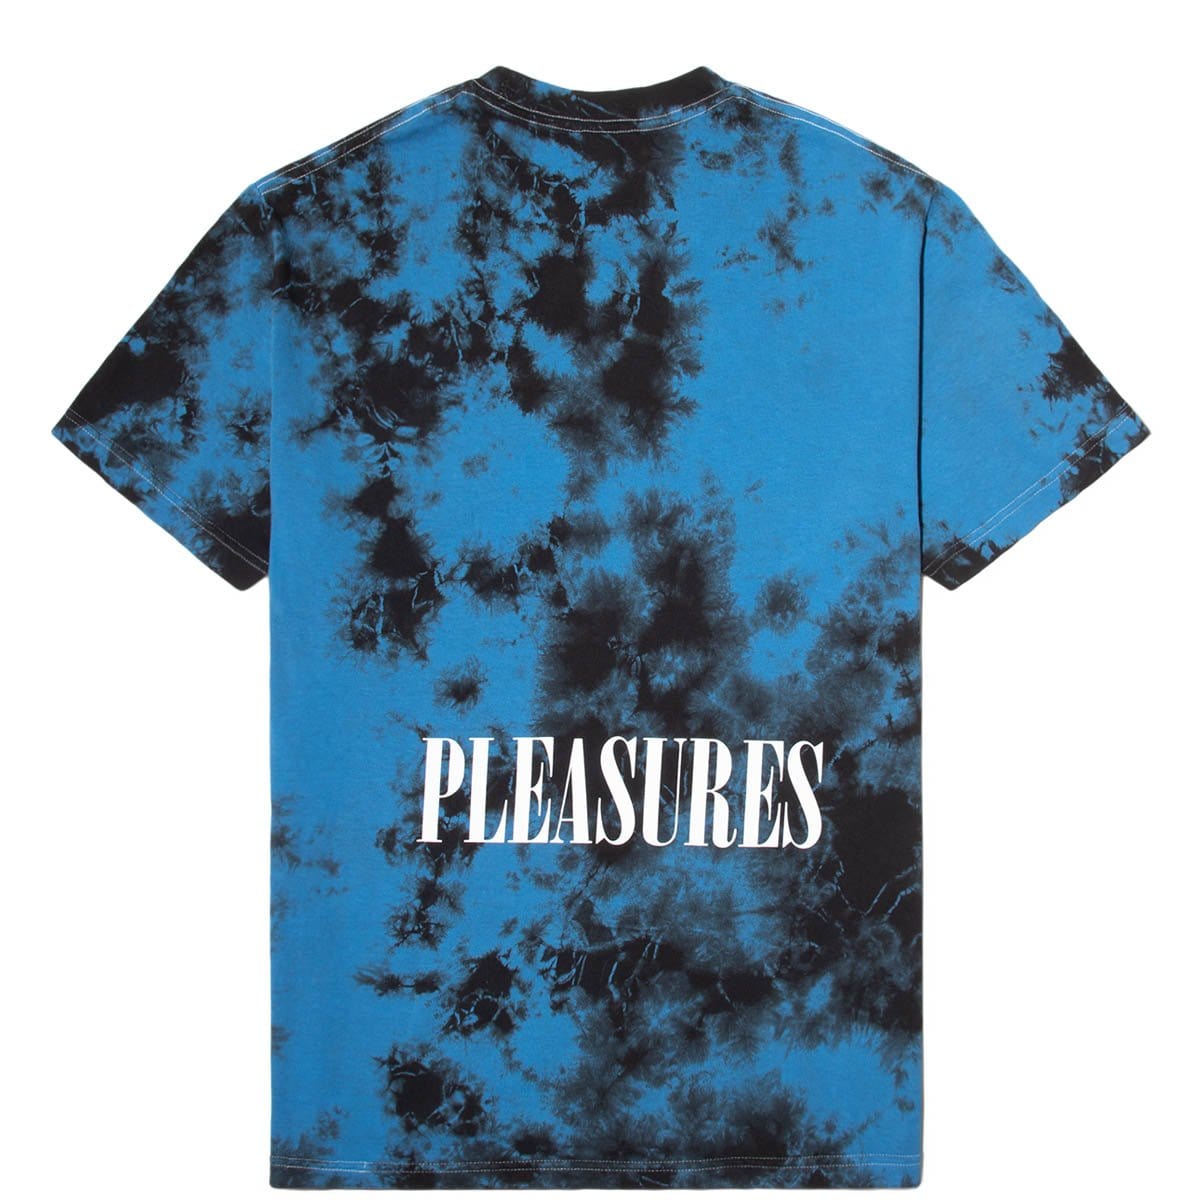 Pleasures T-Shirts DRUGS HELP T-SHIRT